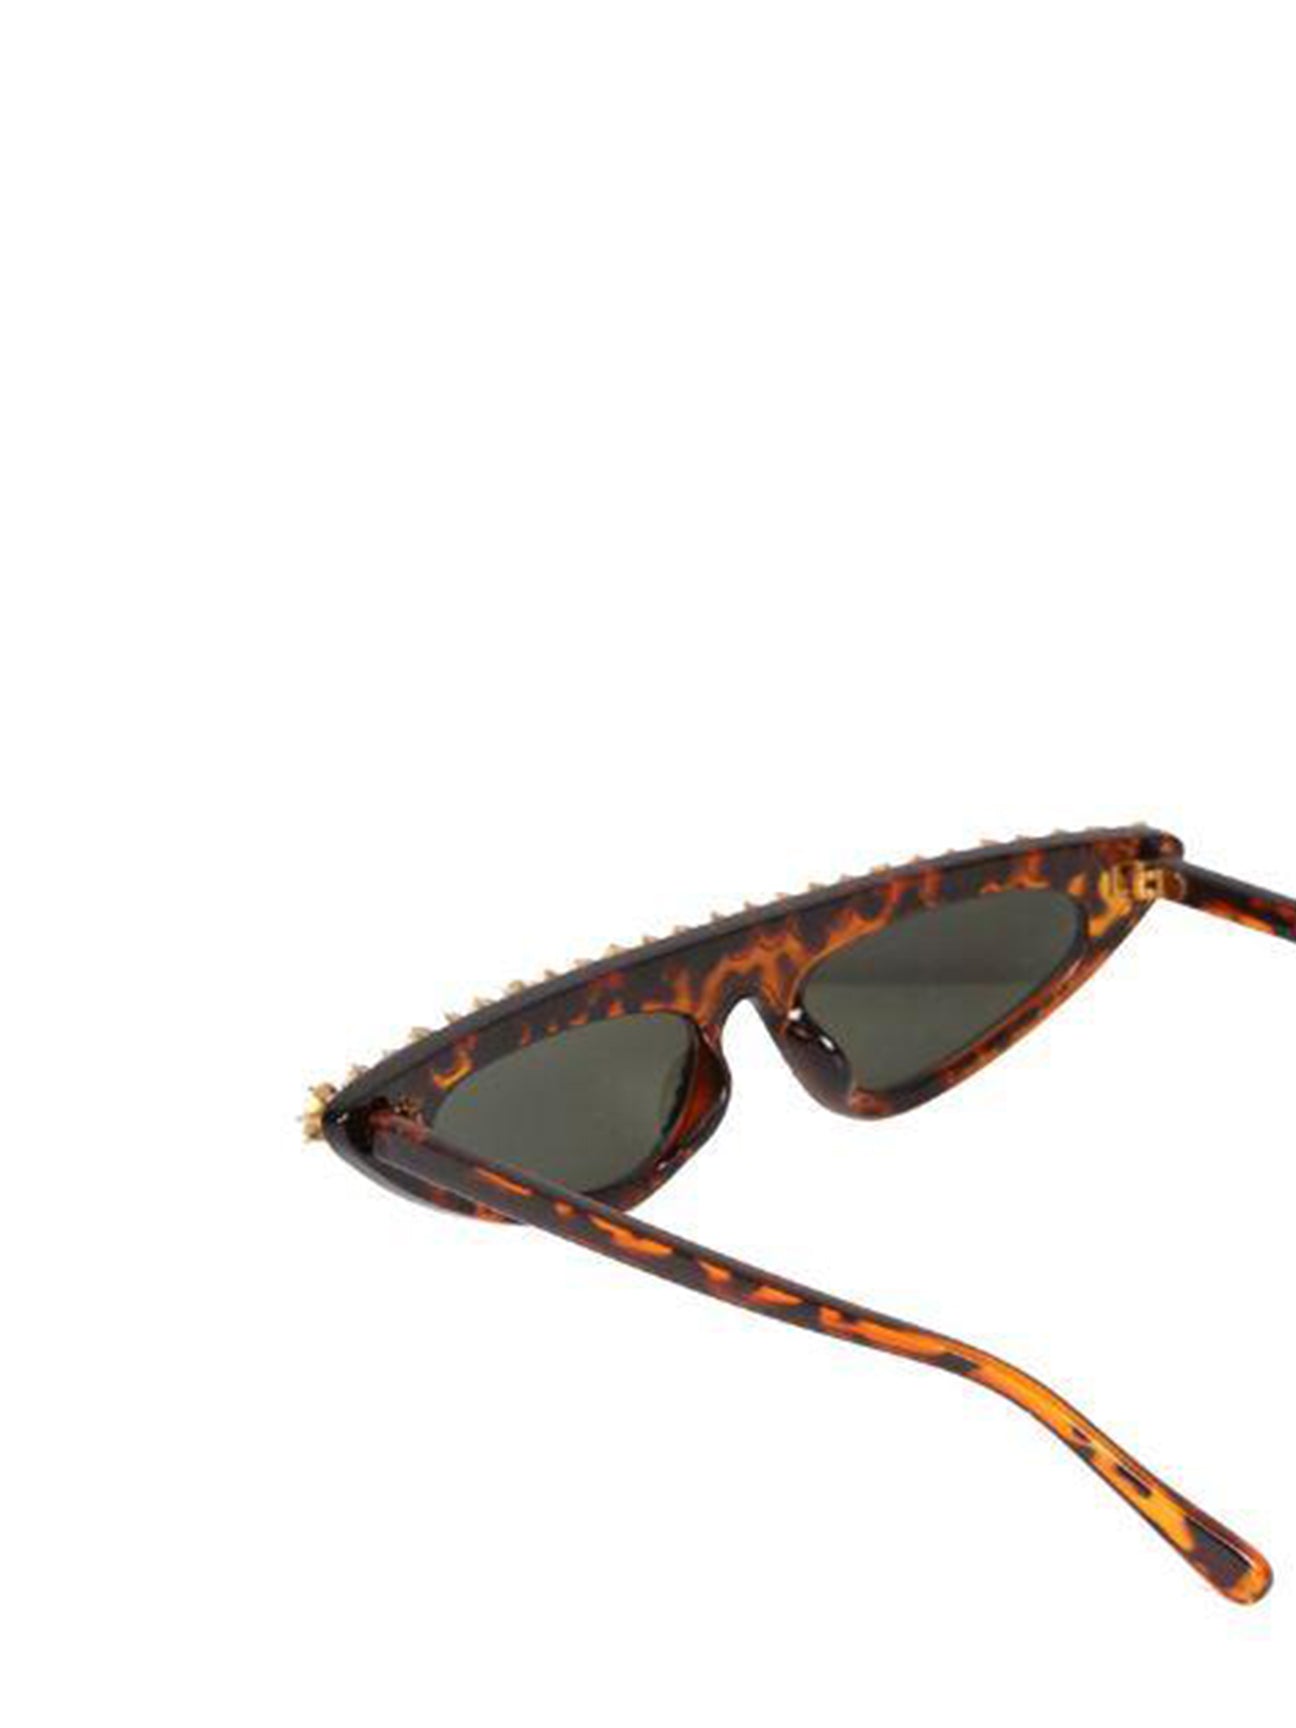 Diamante Cateye Sunglasses In Tortoise Shell